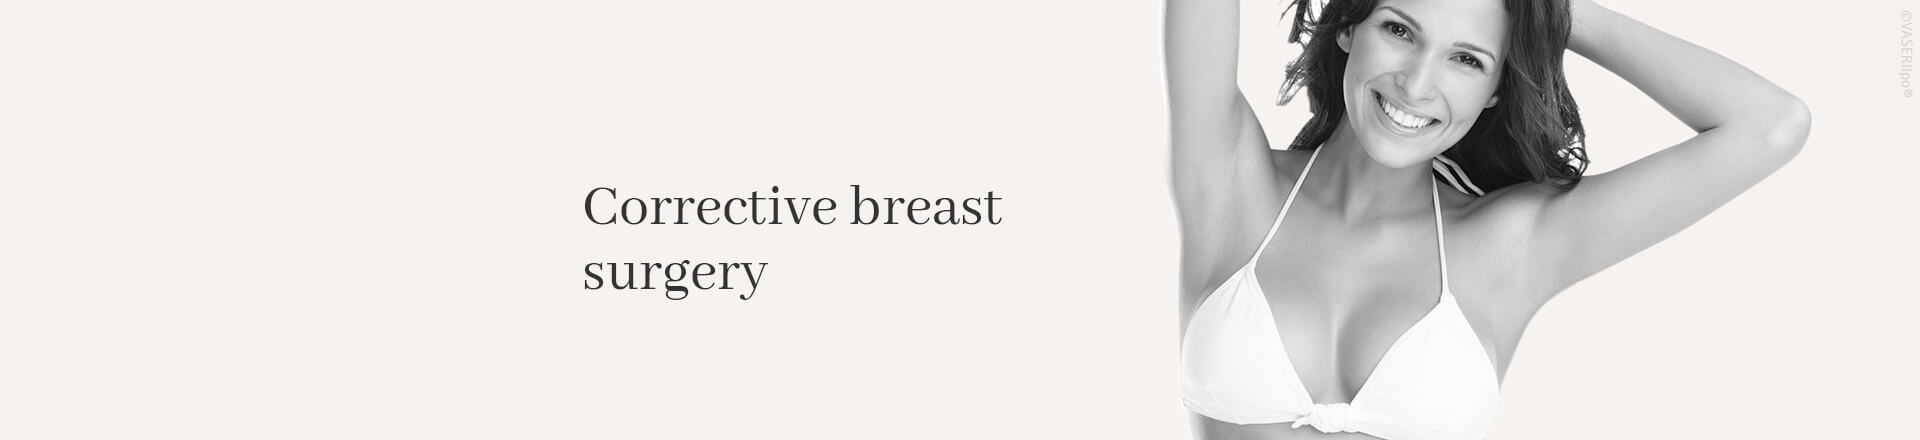 Corrective Breast Surgery, Difine, Dr. Narwan, Plastic Surgery, Essen 